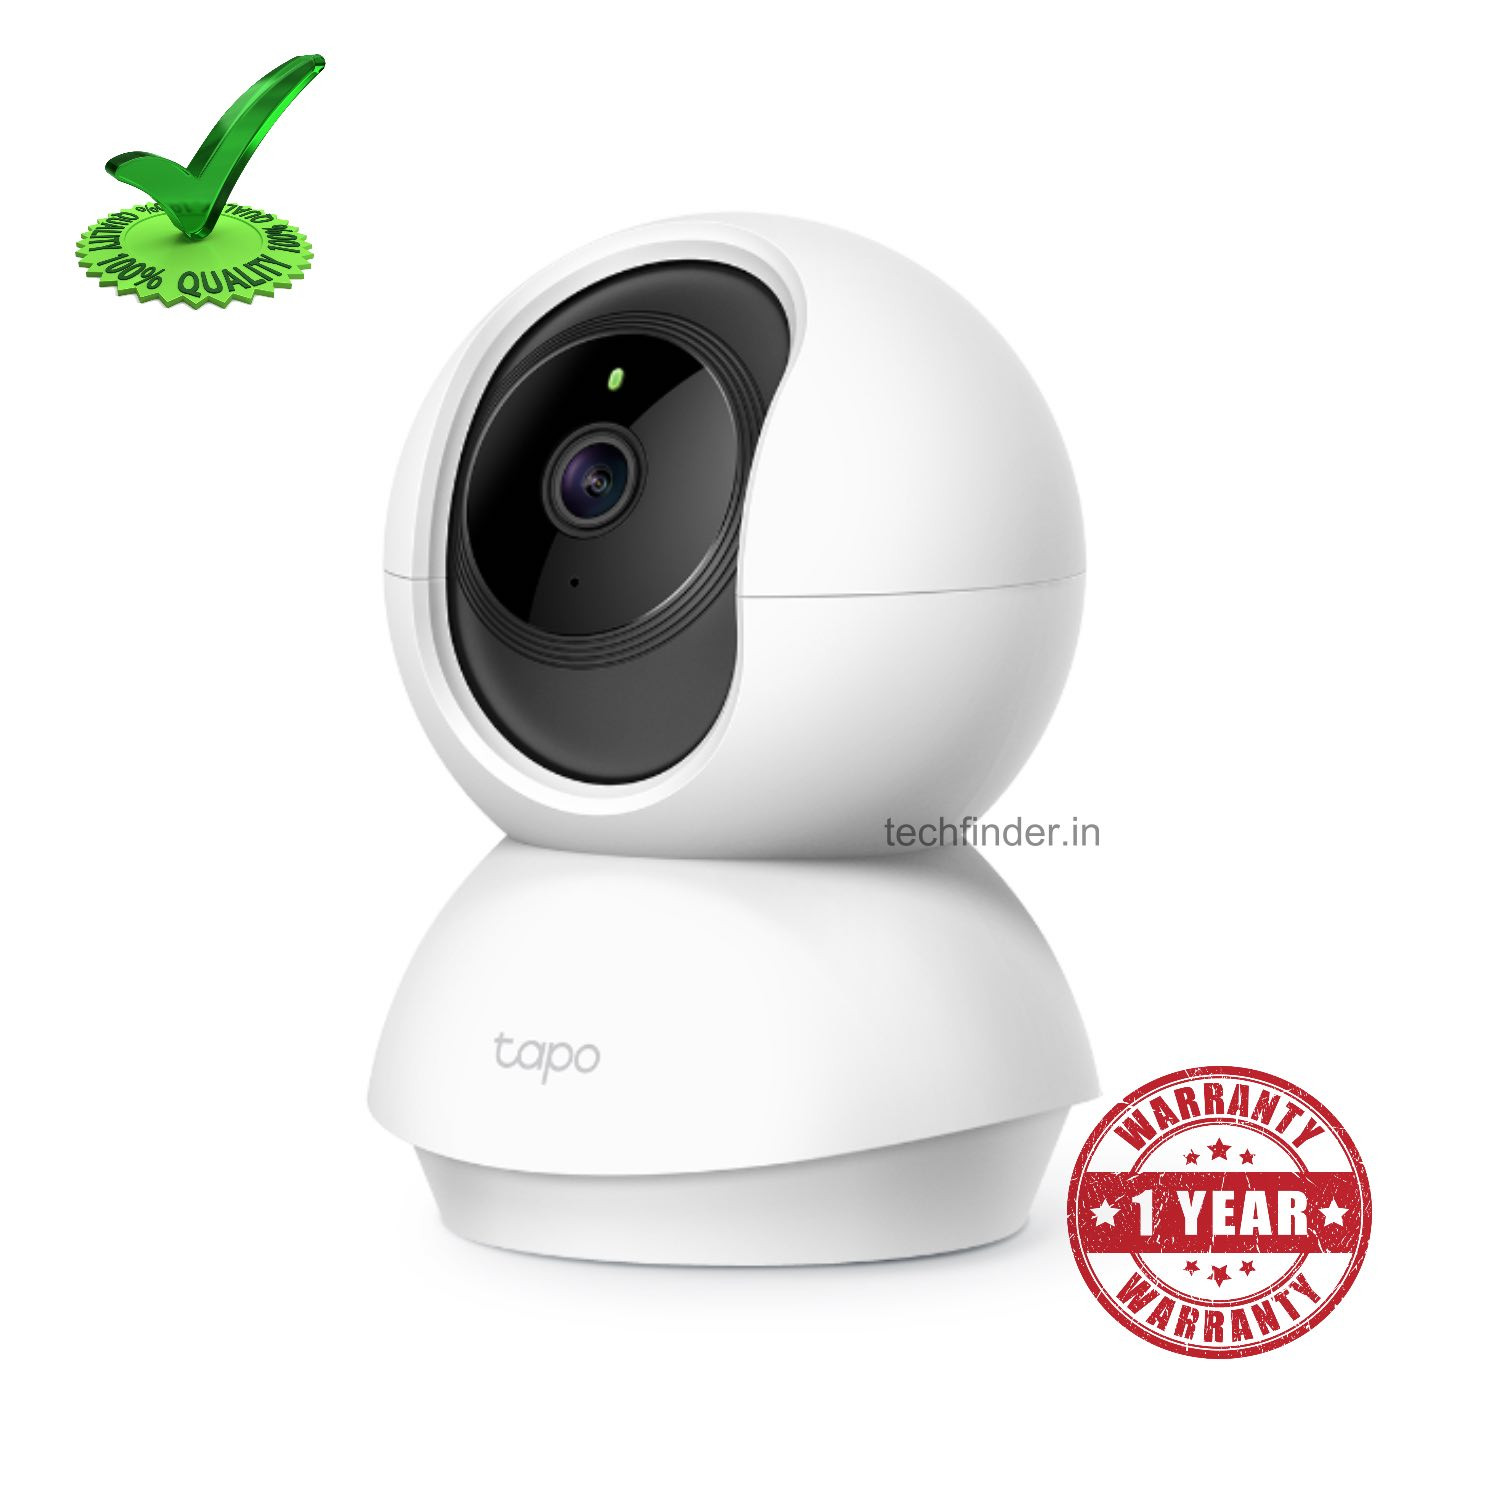 Tp-Link Tapo C200 Pan Tilt Home Security HD Vision Wi-Fi Camera